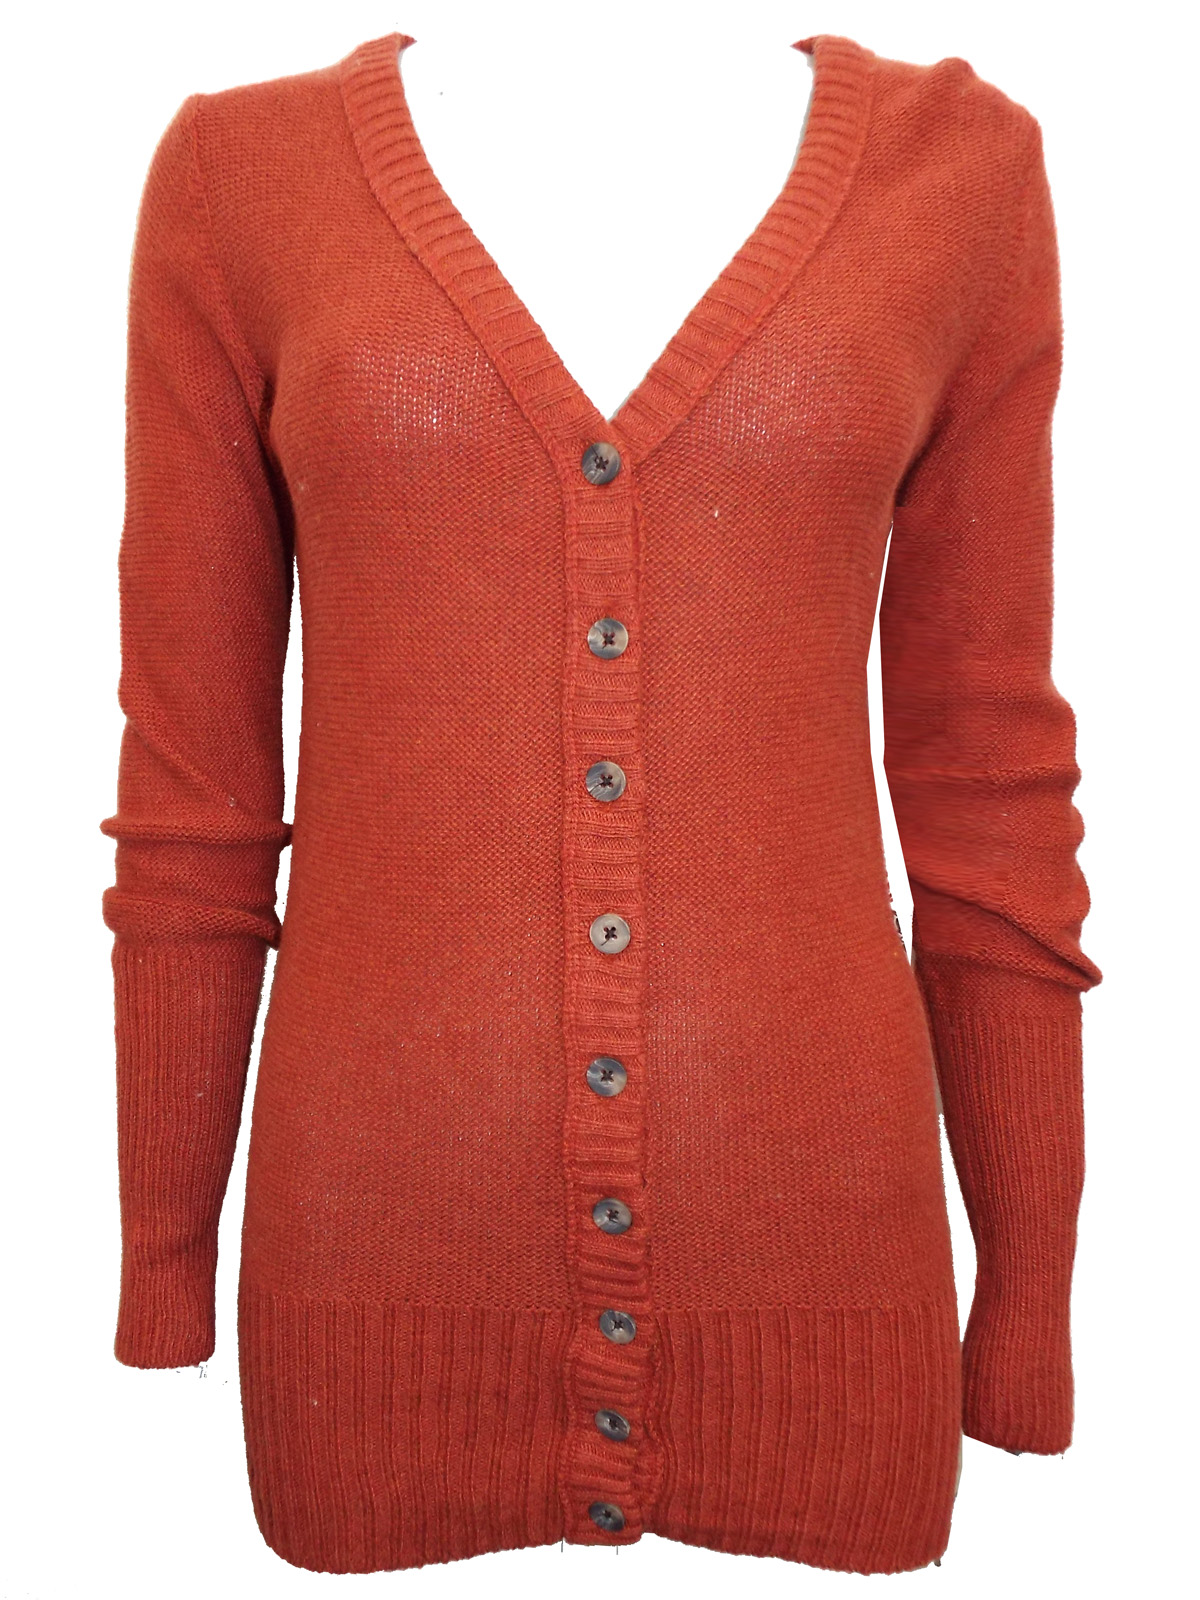 IDI by Matthew - - IDI BRICK-RED Long Sleeve Knitted Cardigan - Size 8/ ...